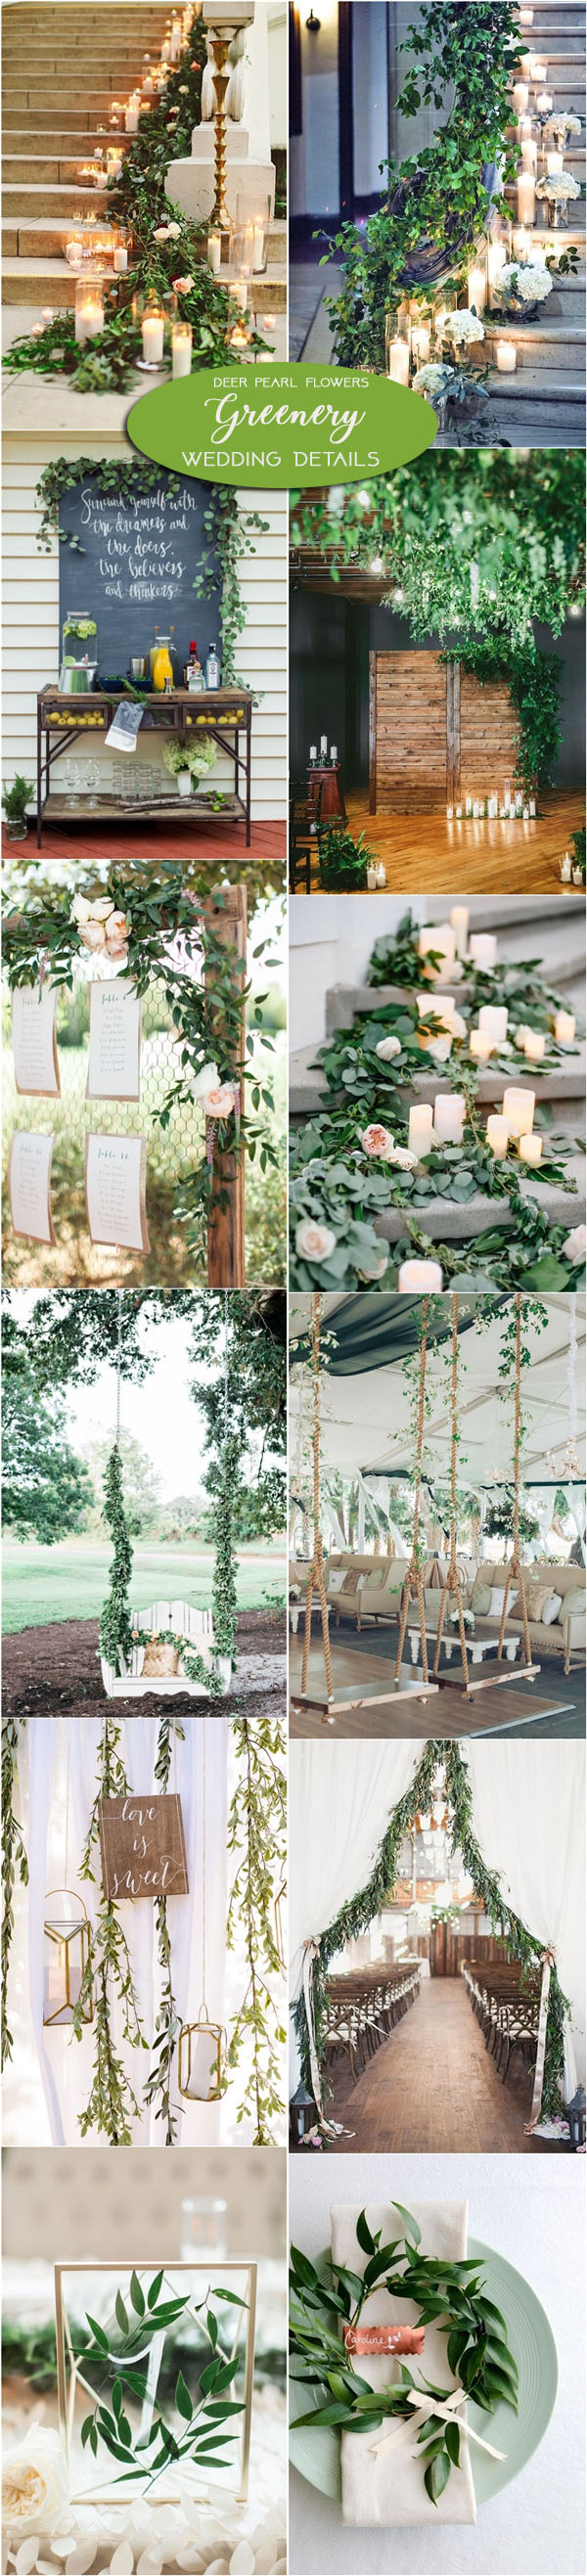 Greenery wedding color ideas & wedding decors